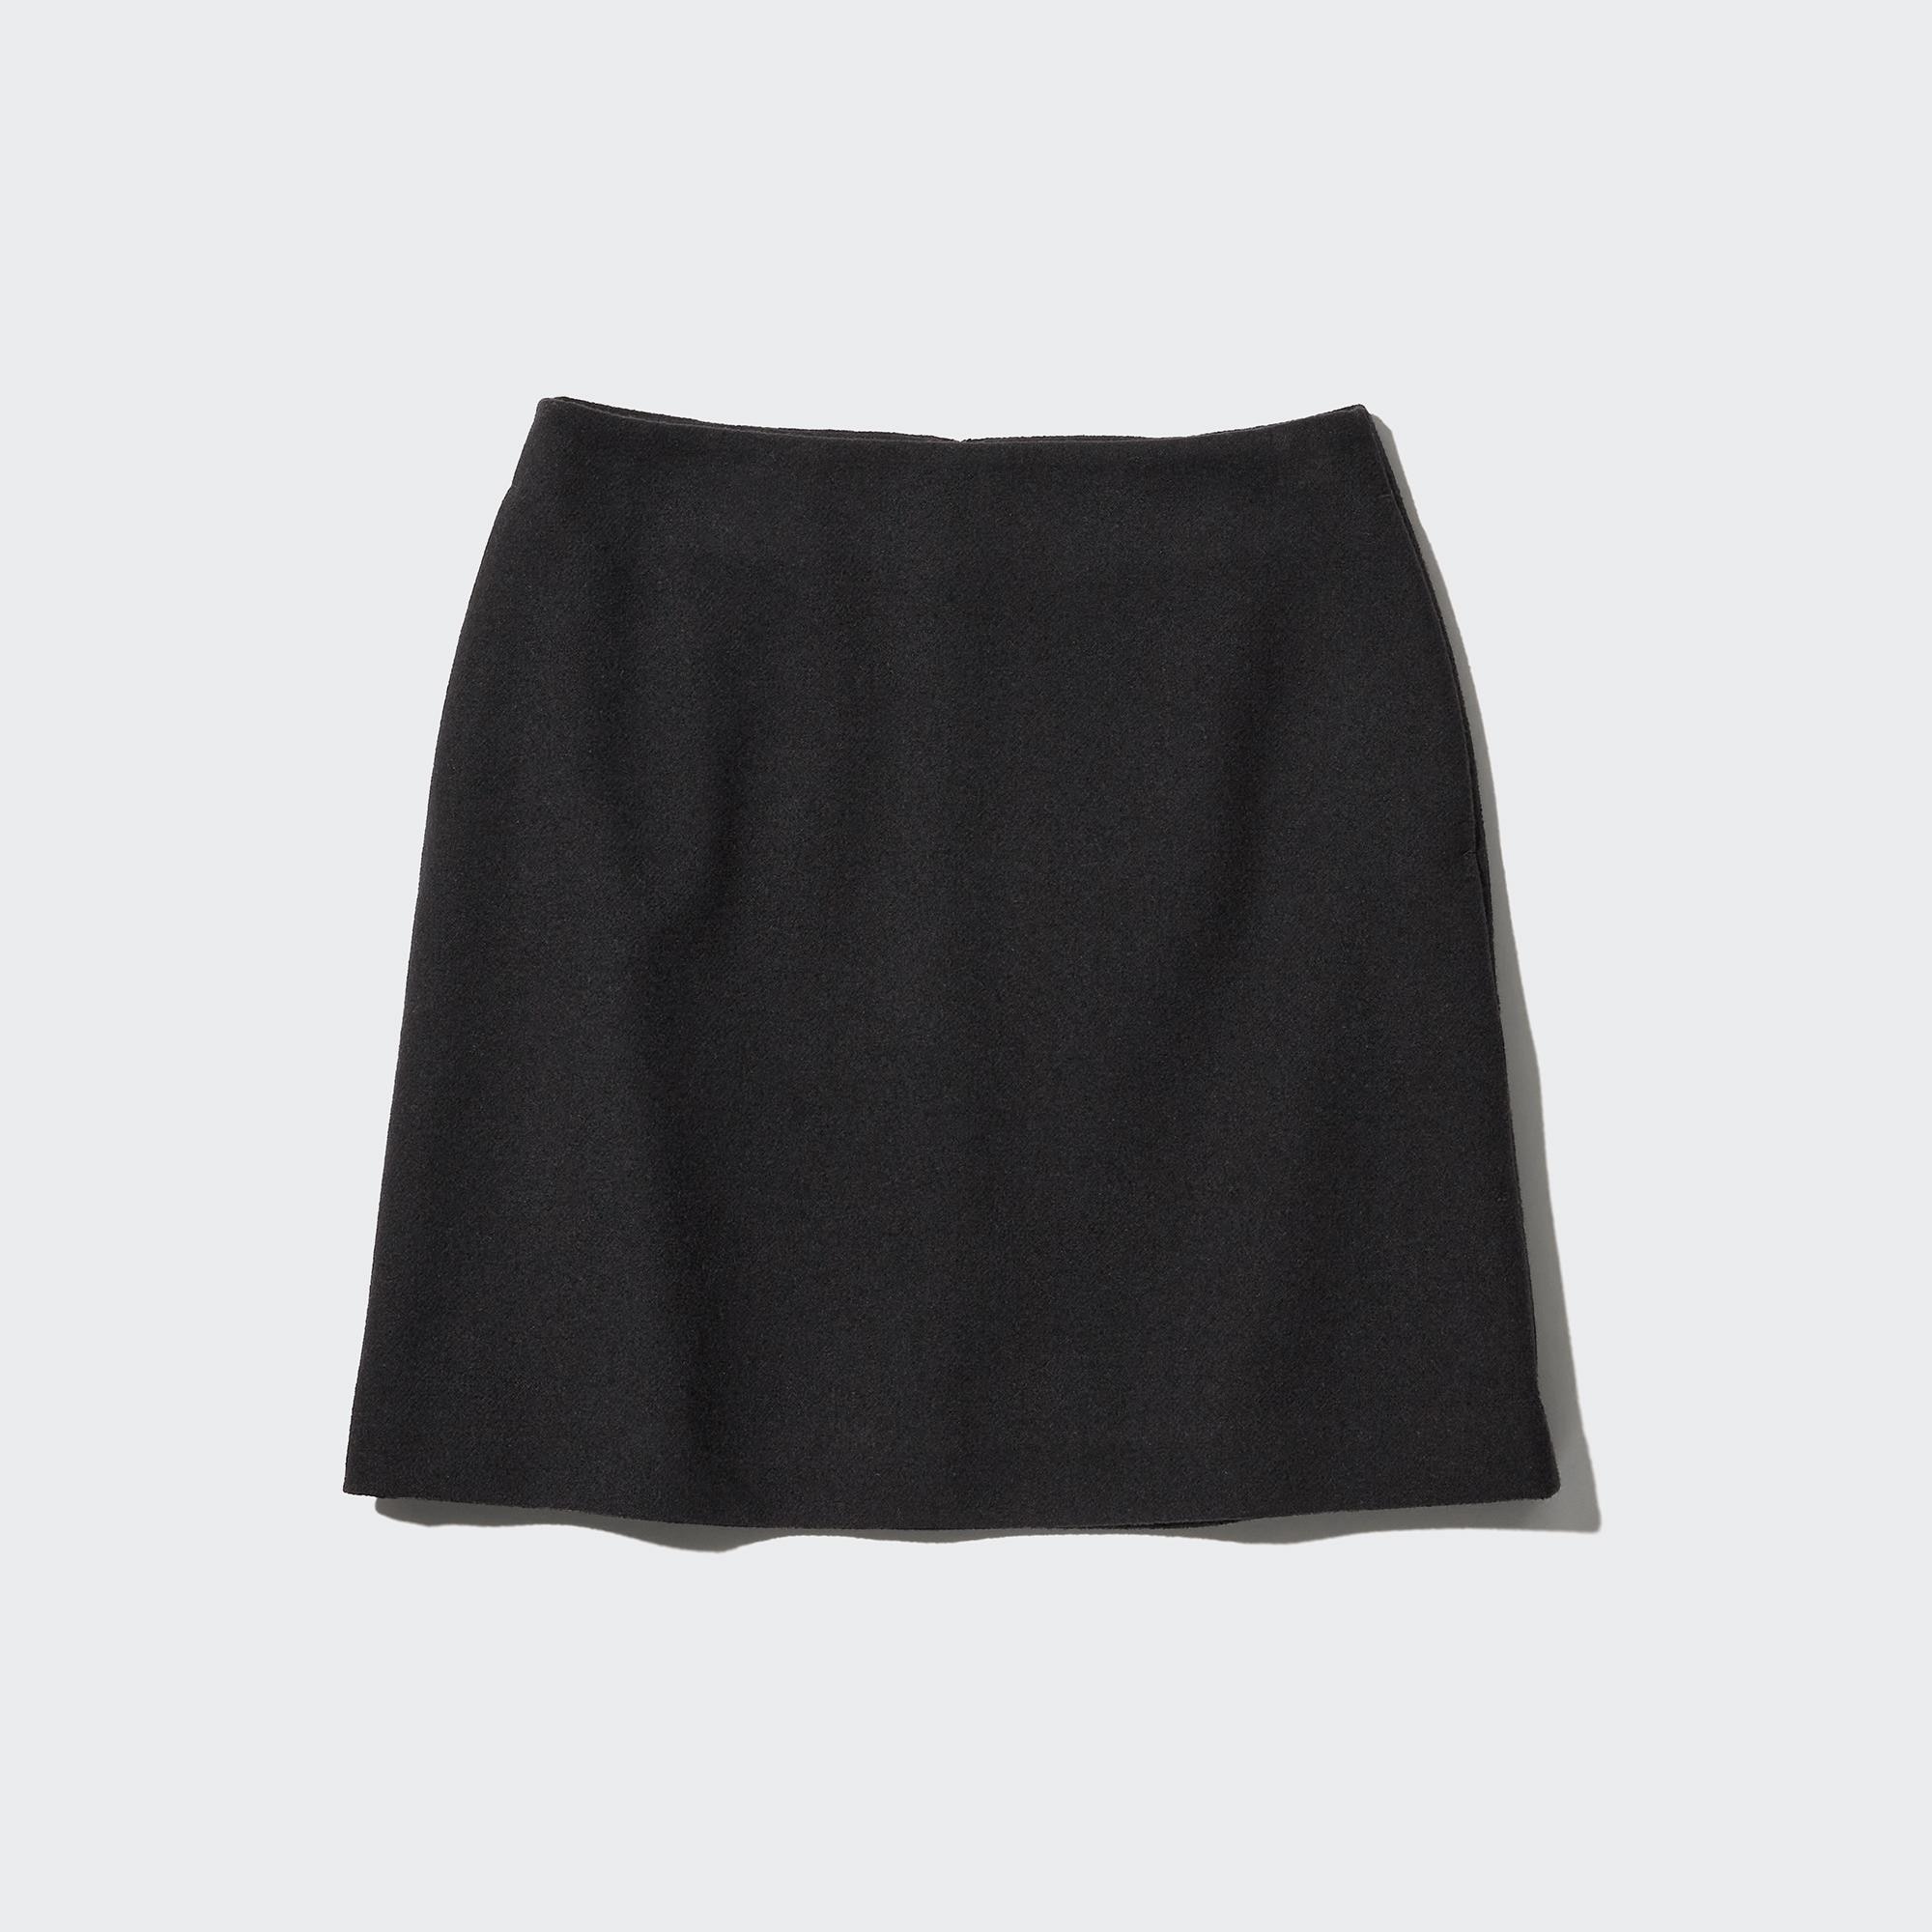 Uniqlo Brown Wool Plaid Flannel Mini Skirt Size 4 | eBay